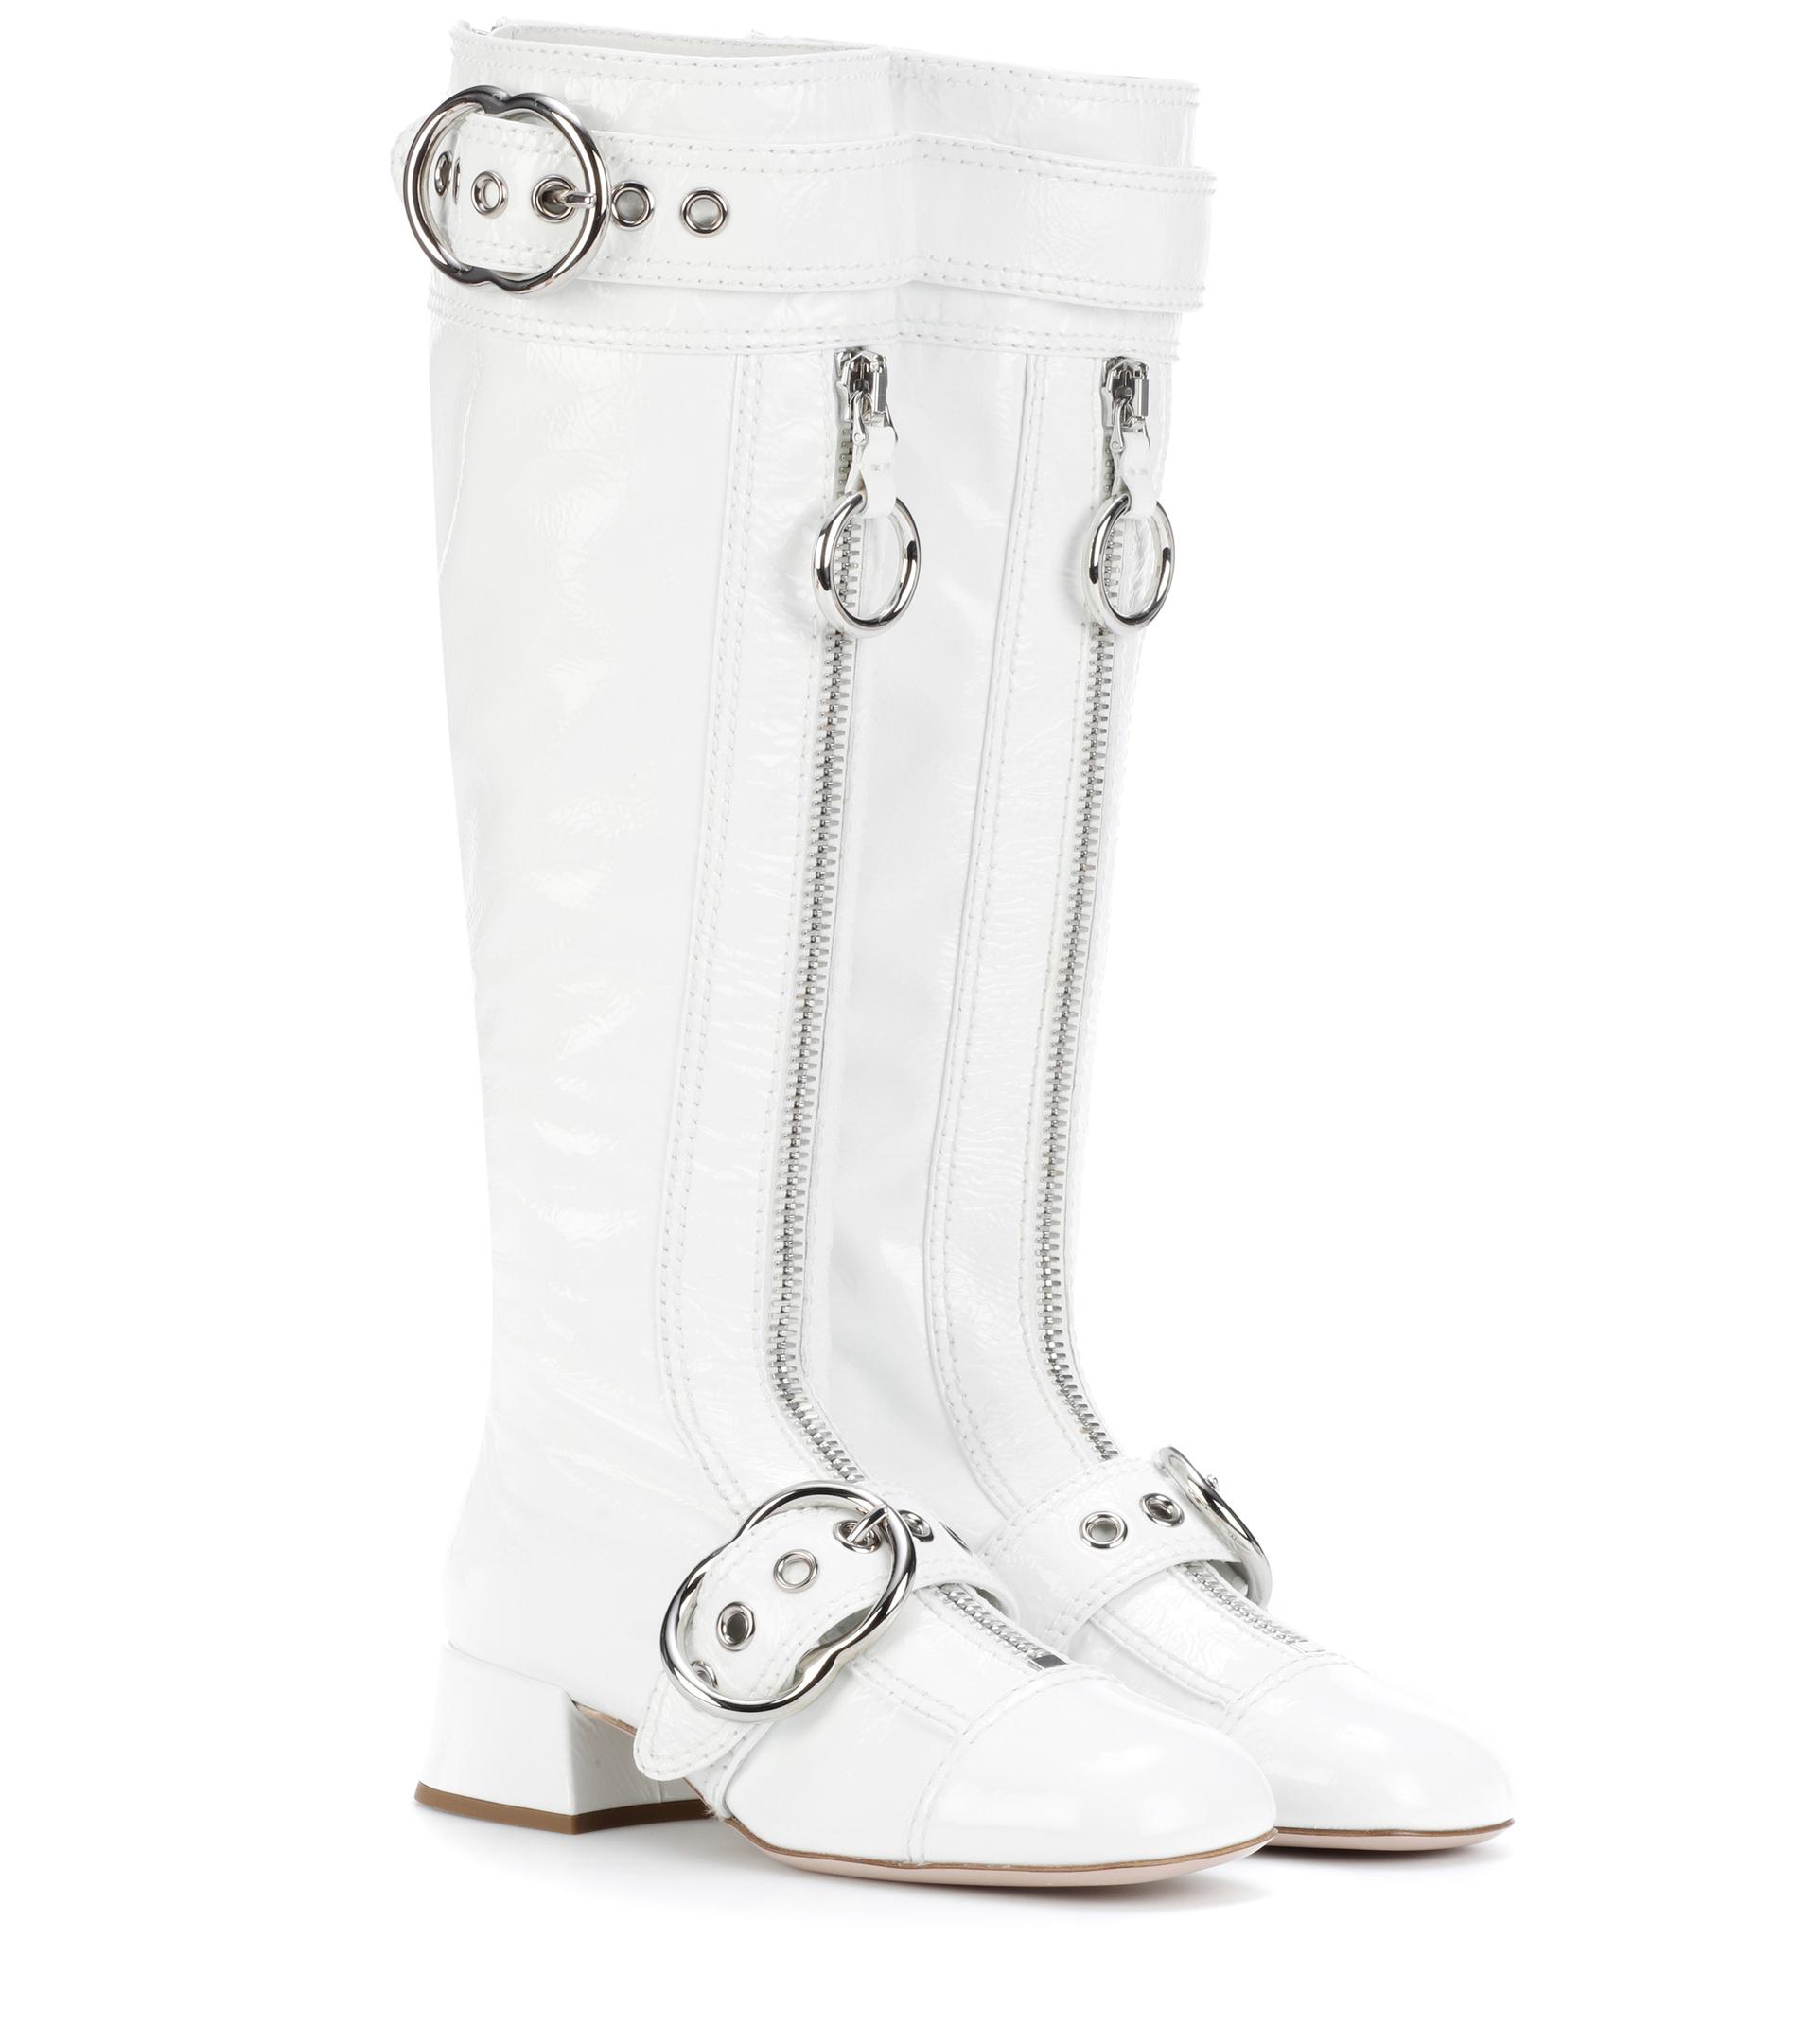 Miu Miu Patent Leather Boots in White - Lyst